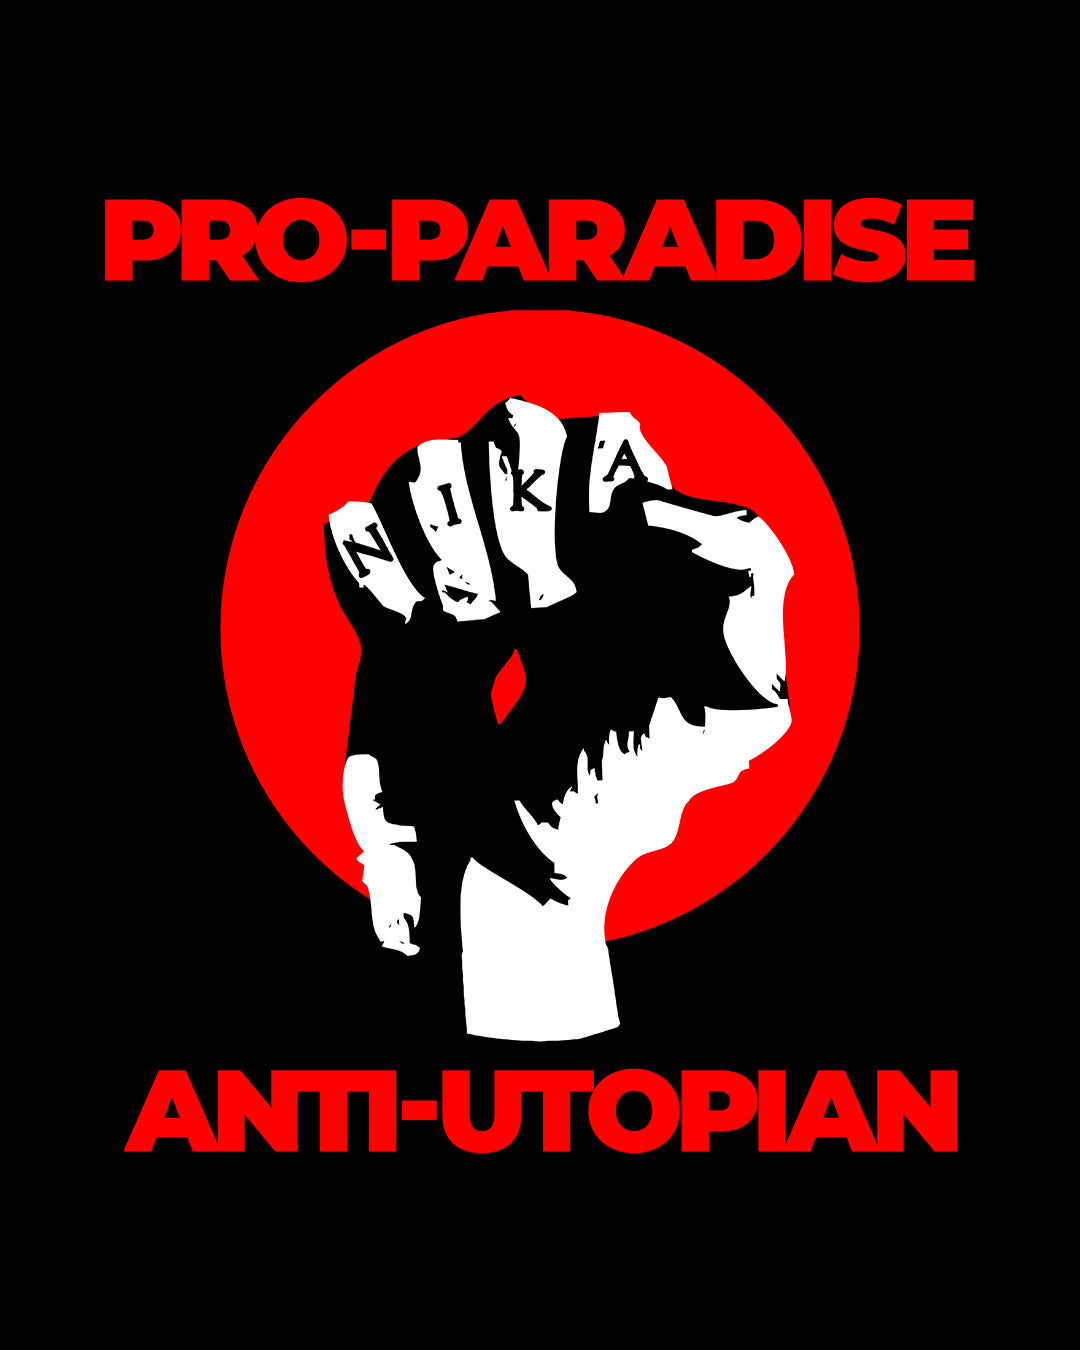 Pro-Paradise Anti-Utopian No. 1 | Orthodox Christian Hoodie / Hooded Sweatshirt